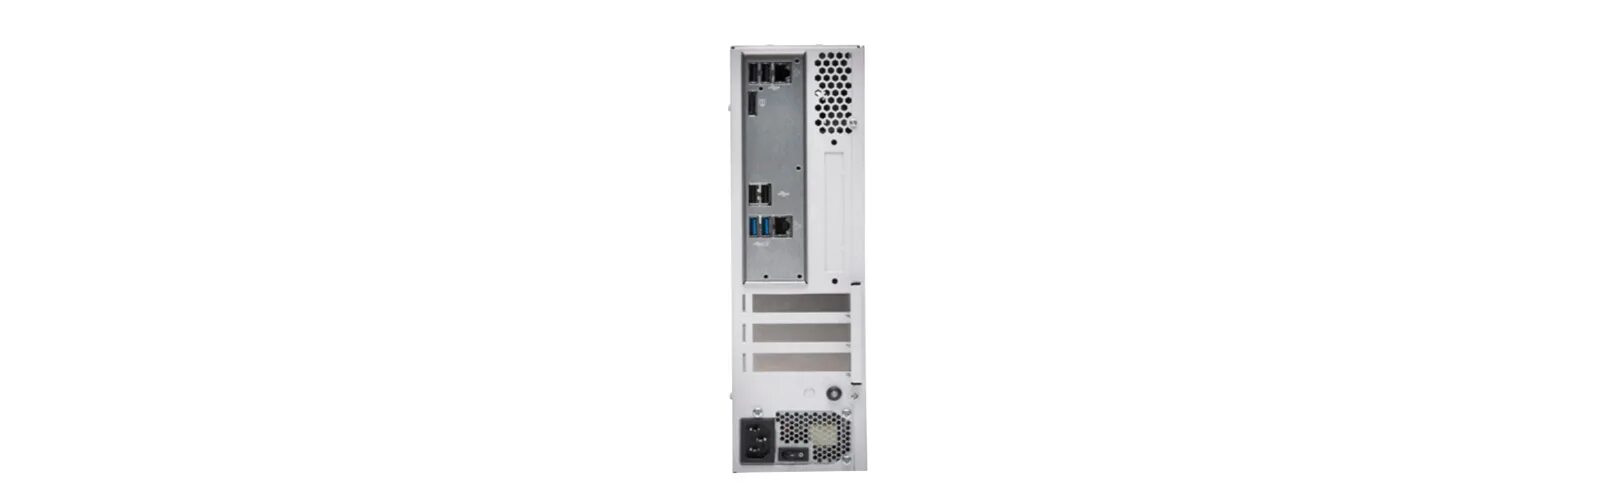 8515b035 контроллер IMAGEPRESS Server g200. IMAGEPRESS Server g250 v 2.0. Контроллер печати fiery c9065 ex-i. P255g200. G server